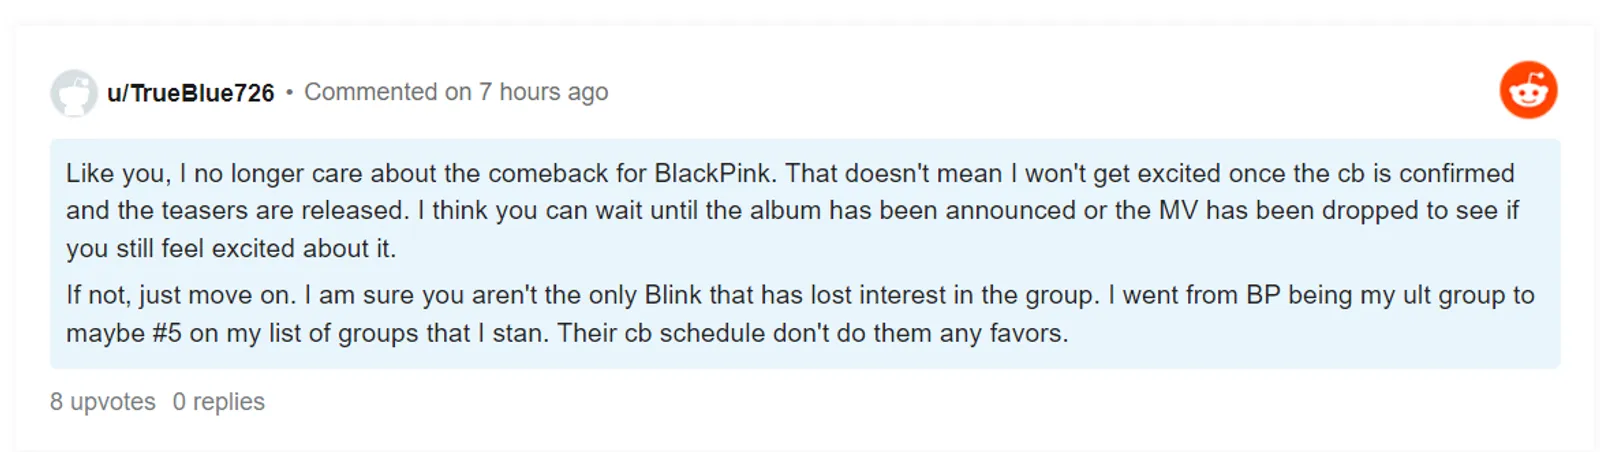 Terlalu Lama Hiatus, BLINK Akui Ingin Move On dari BLACKPINK